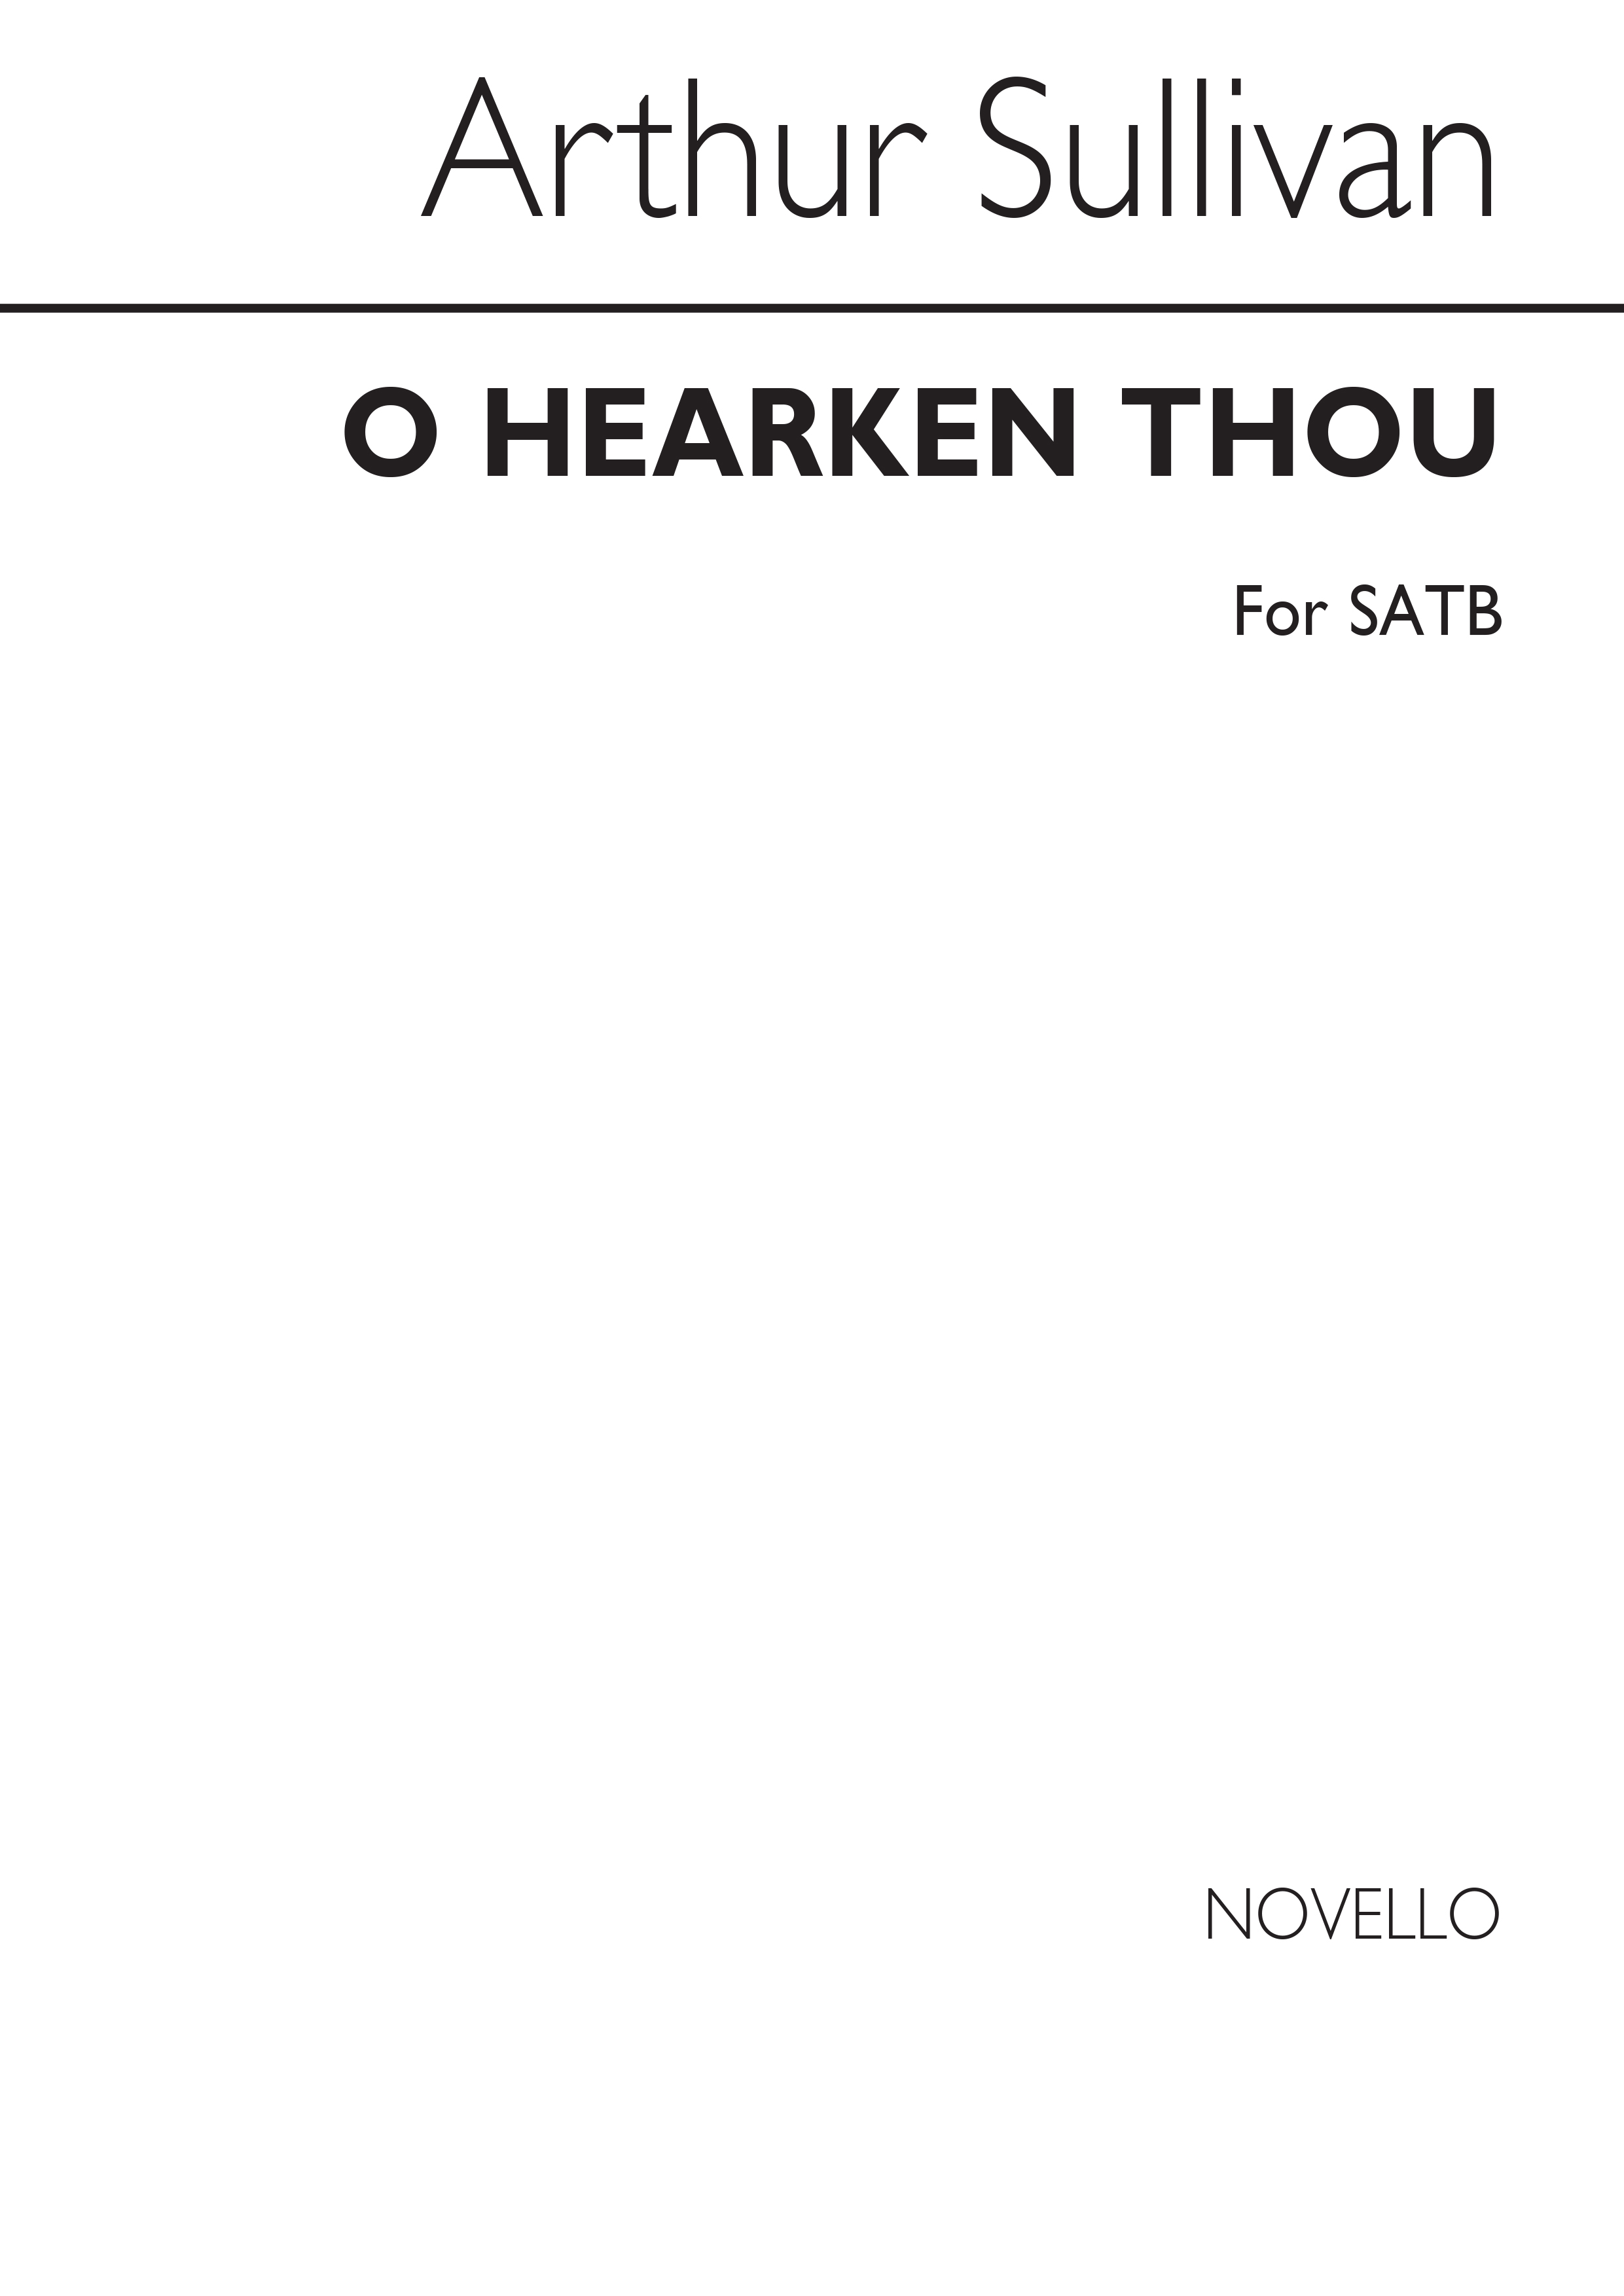 Sullivan, A O Hearken Thou Satb